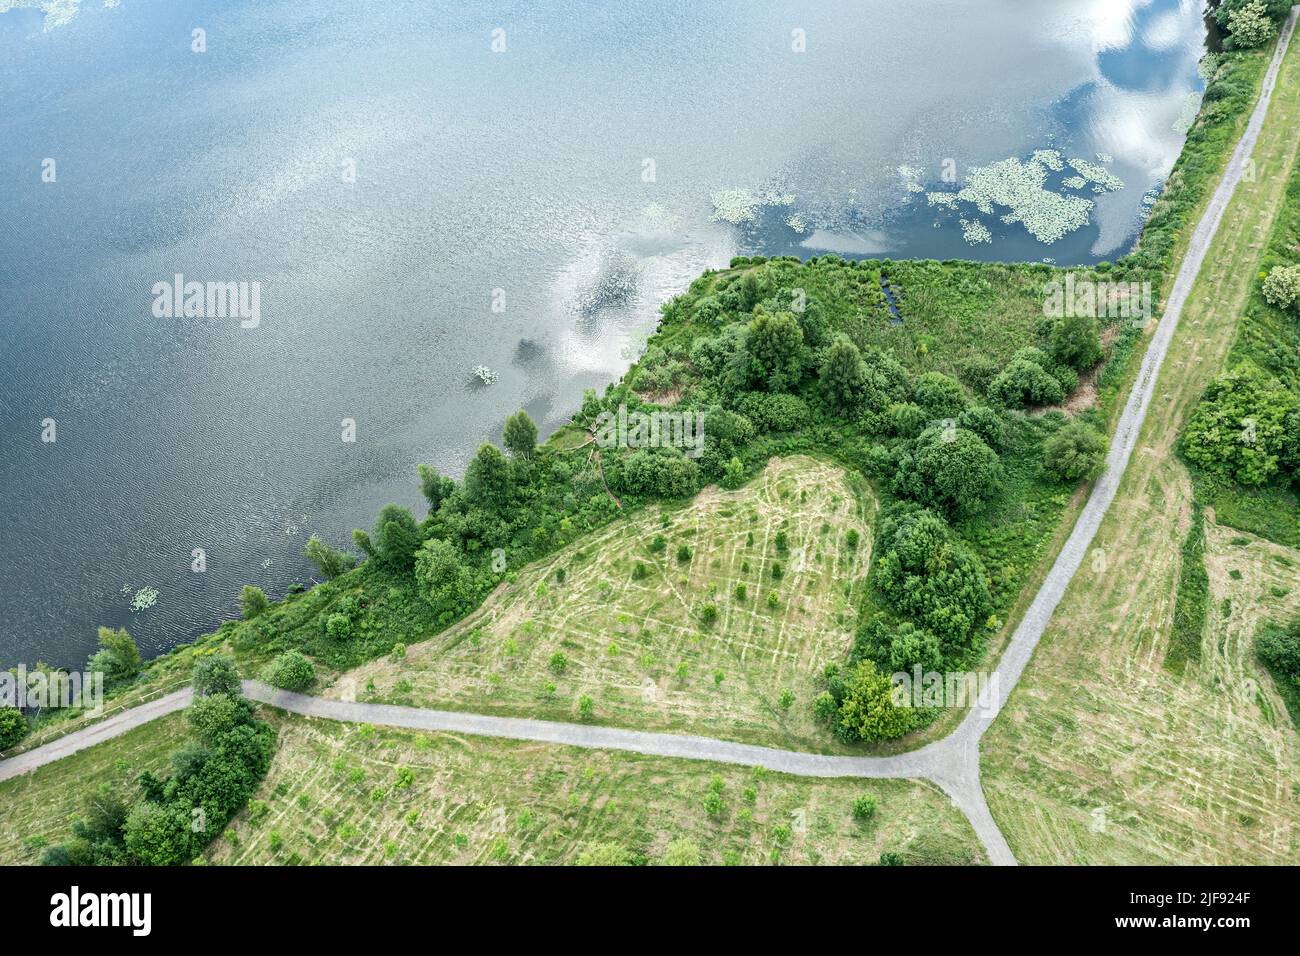 summer green landscape. pedestrian paths or bike lane on lake shore. aerial overhead view. Stock Photo